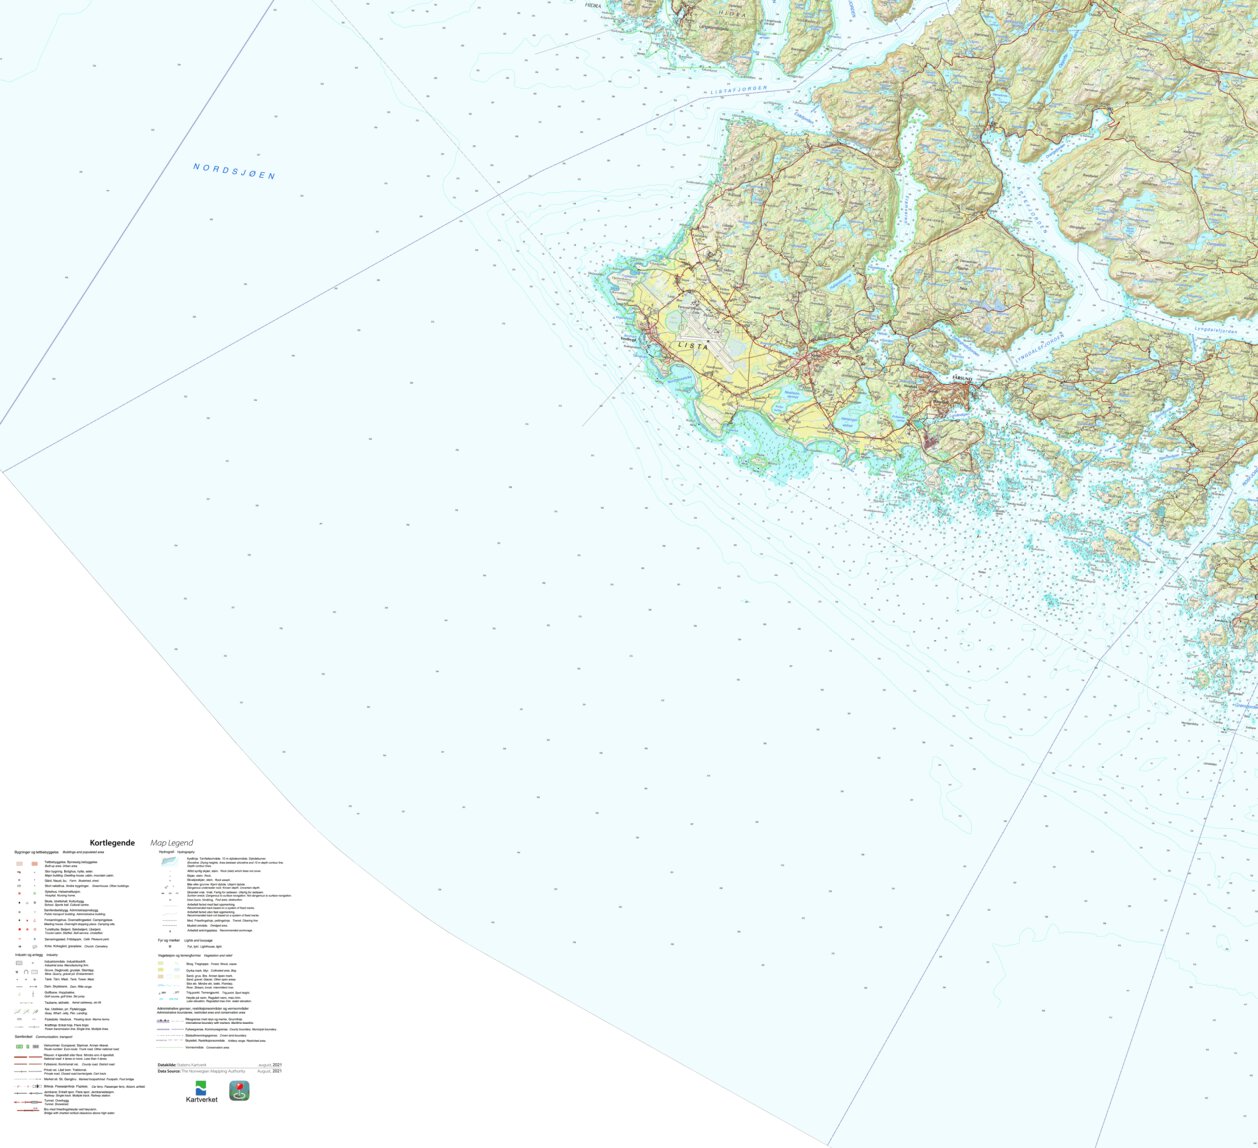 Municipality Of Farsund Map By The Norwegian Mapping Authority Avenza Maps Avenza Maps 3114